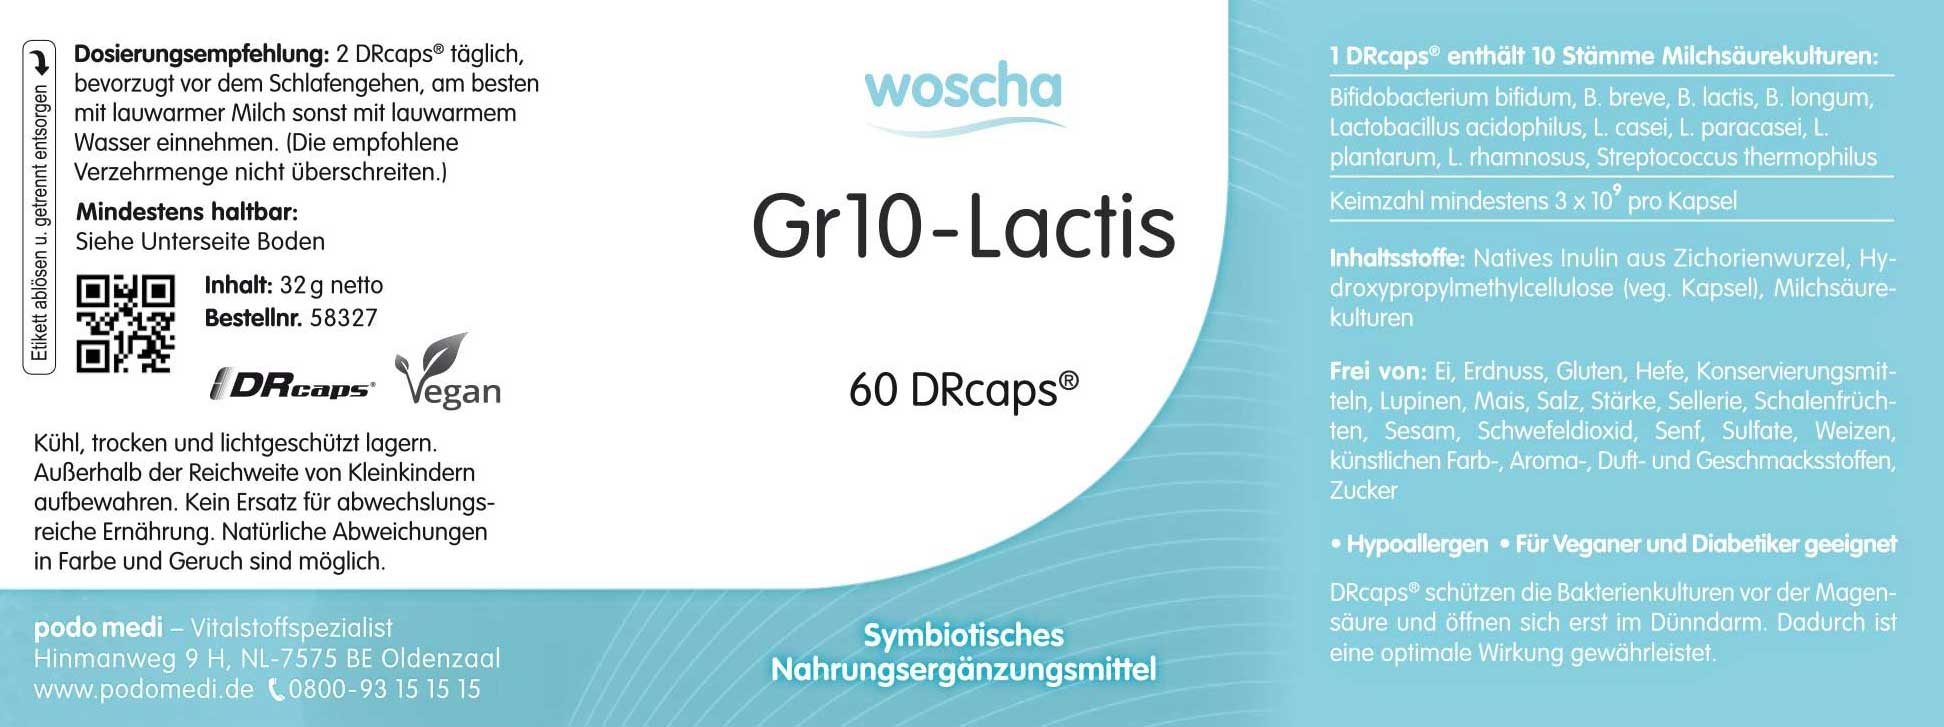 Woscha GR10-Lactis podo medi 60 DRcaps Etikett